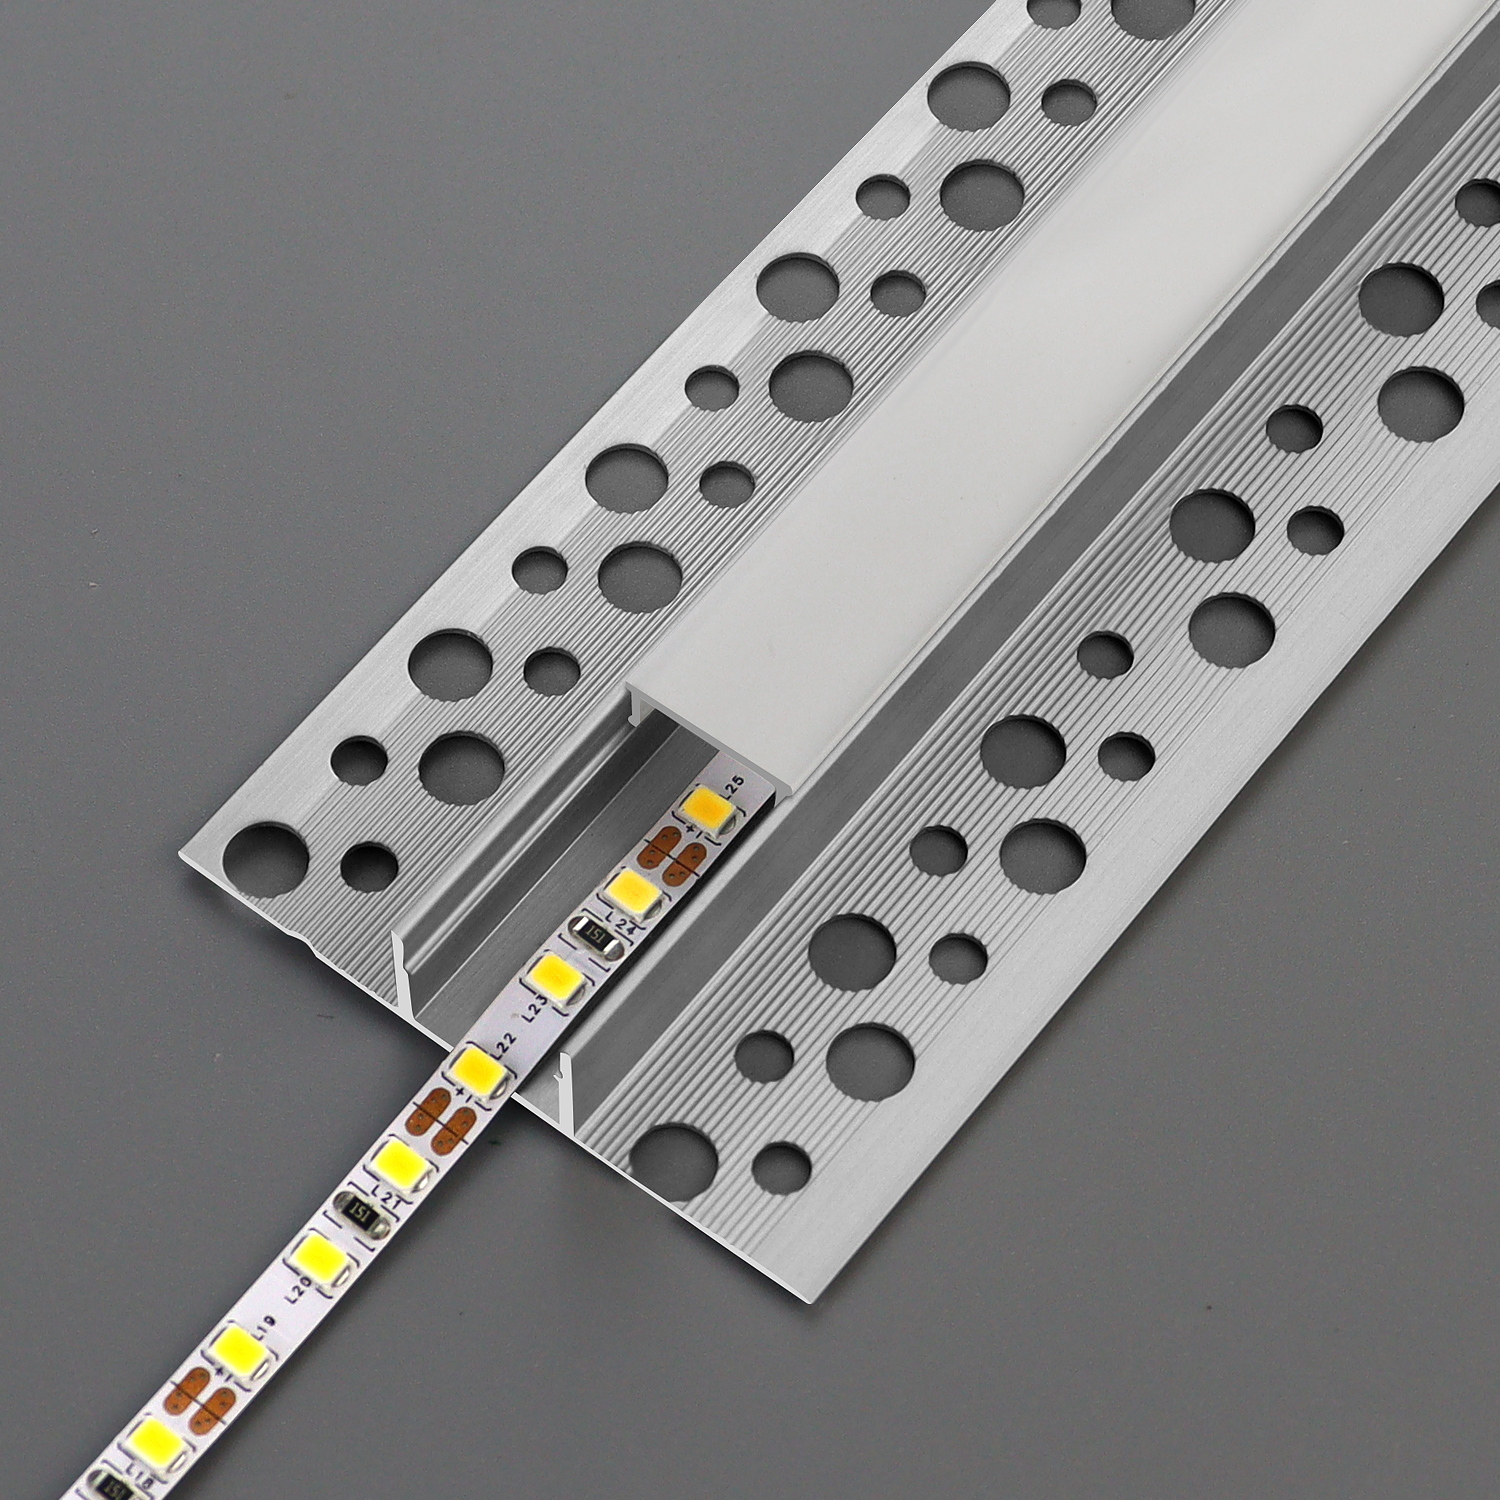 Aluminum Profile LED Strip Lights with Recessed Design